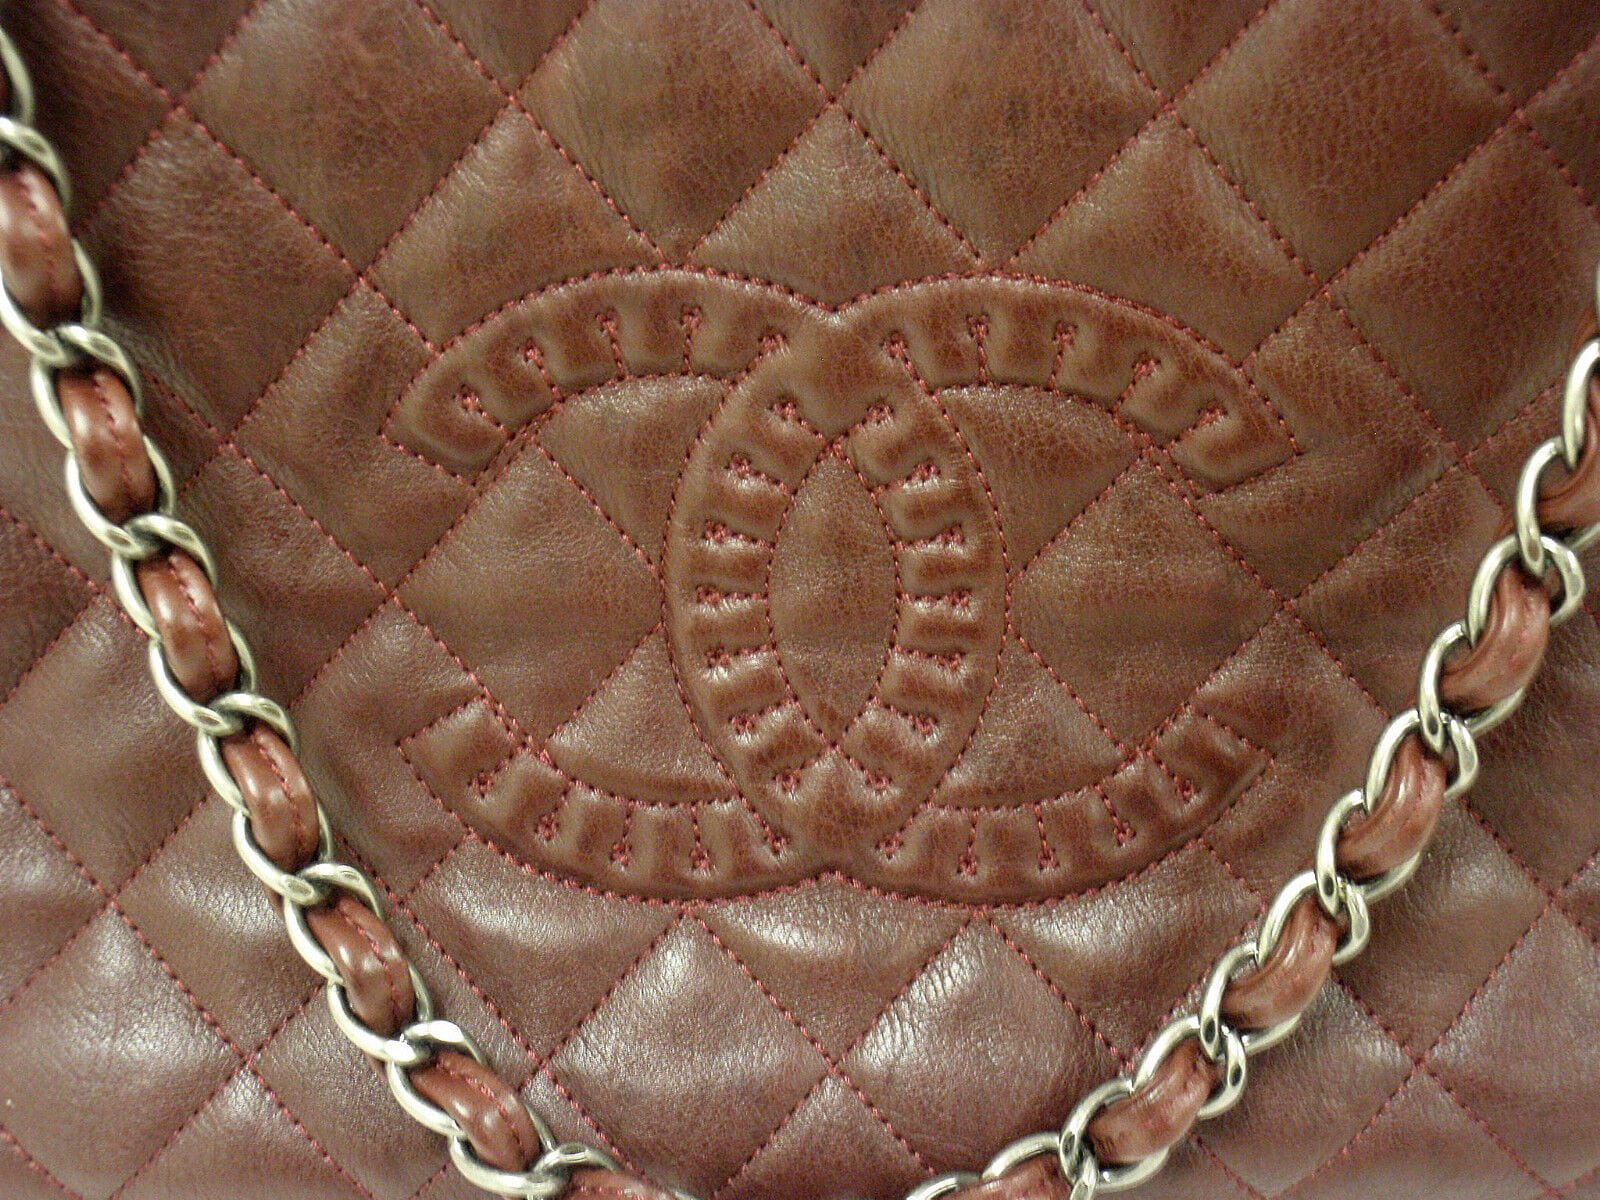 chanel crossbody chain bag strap